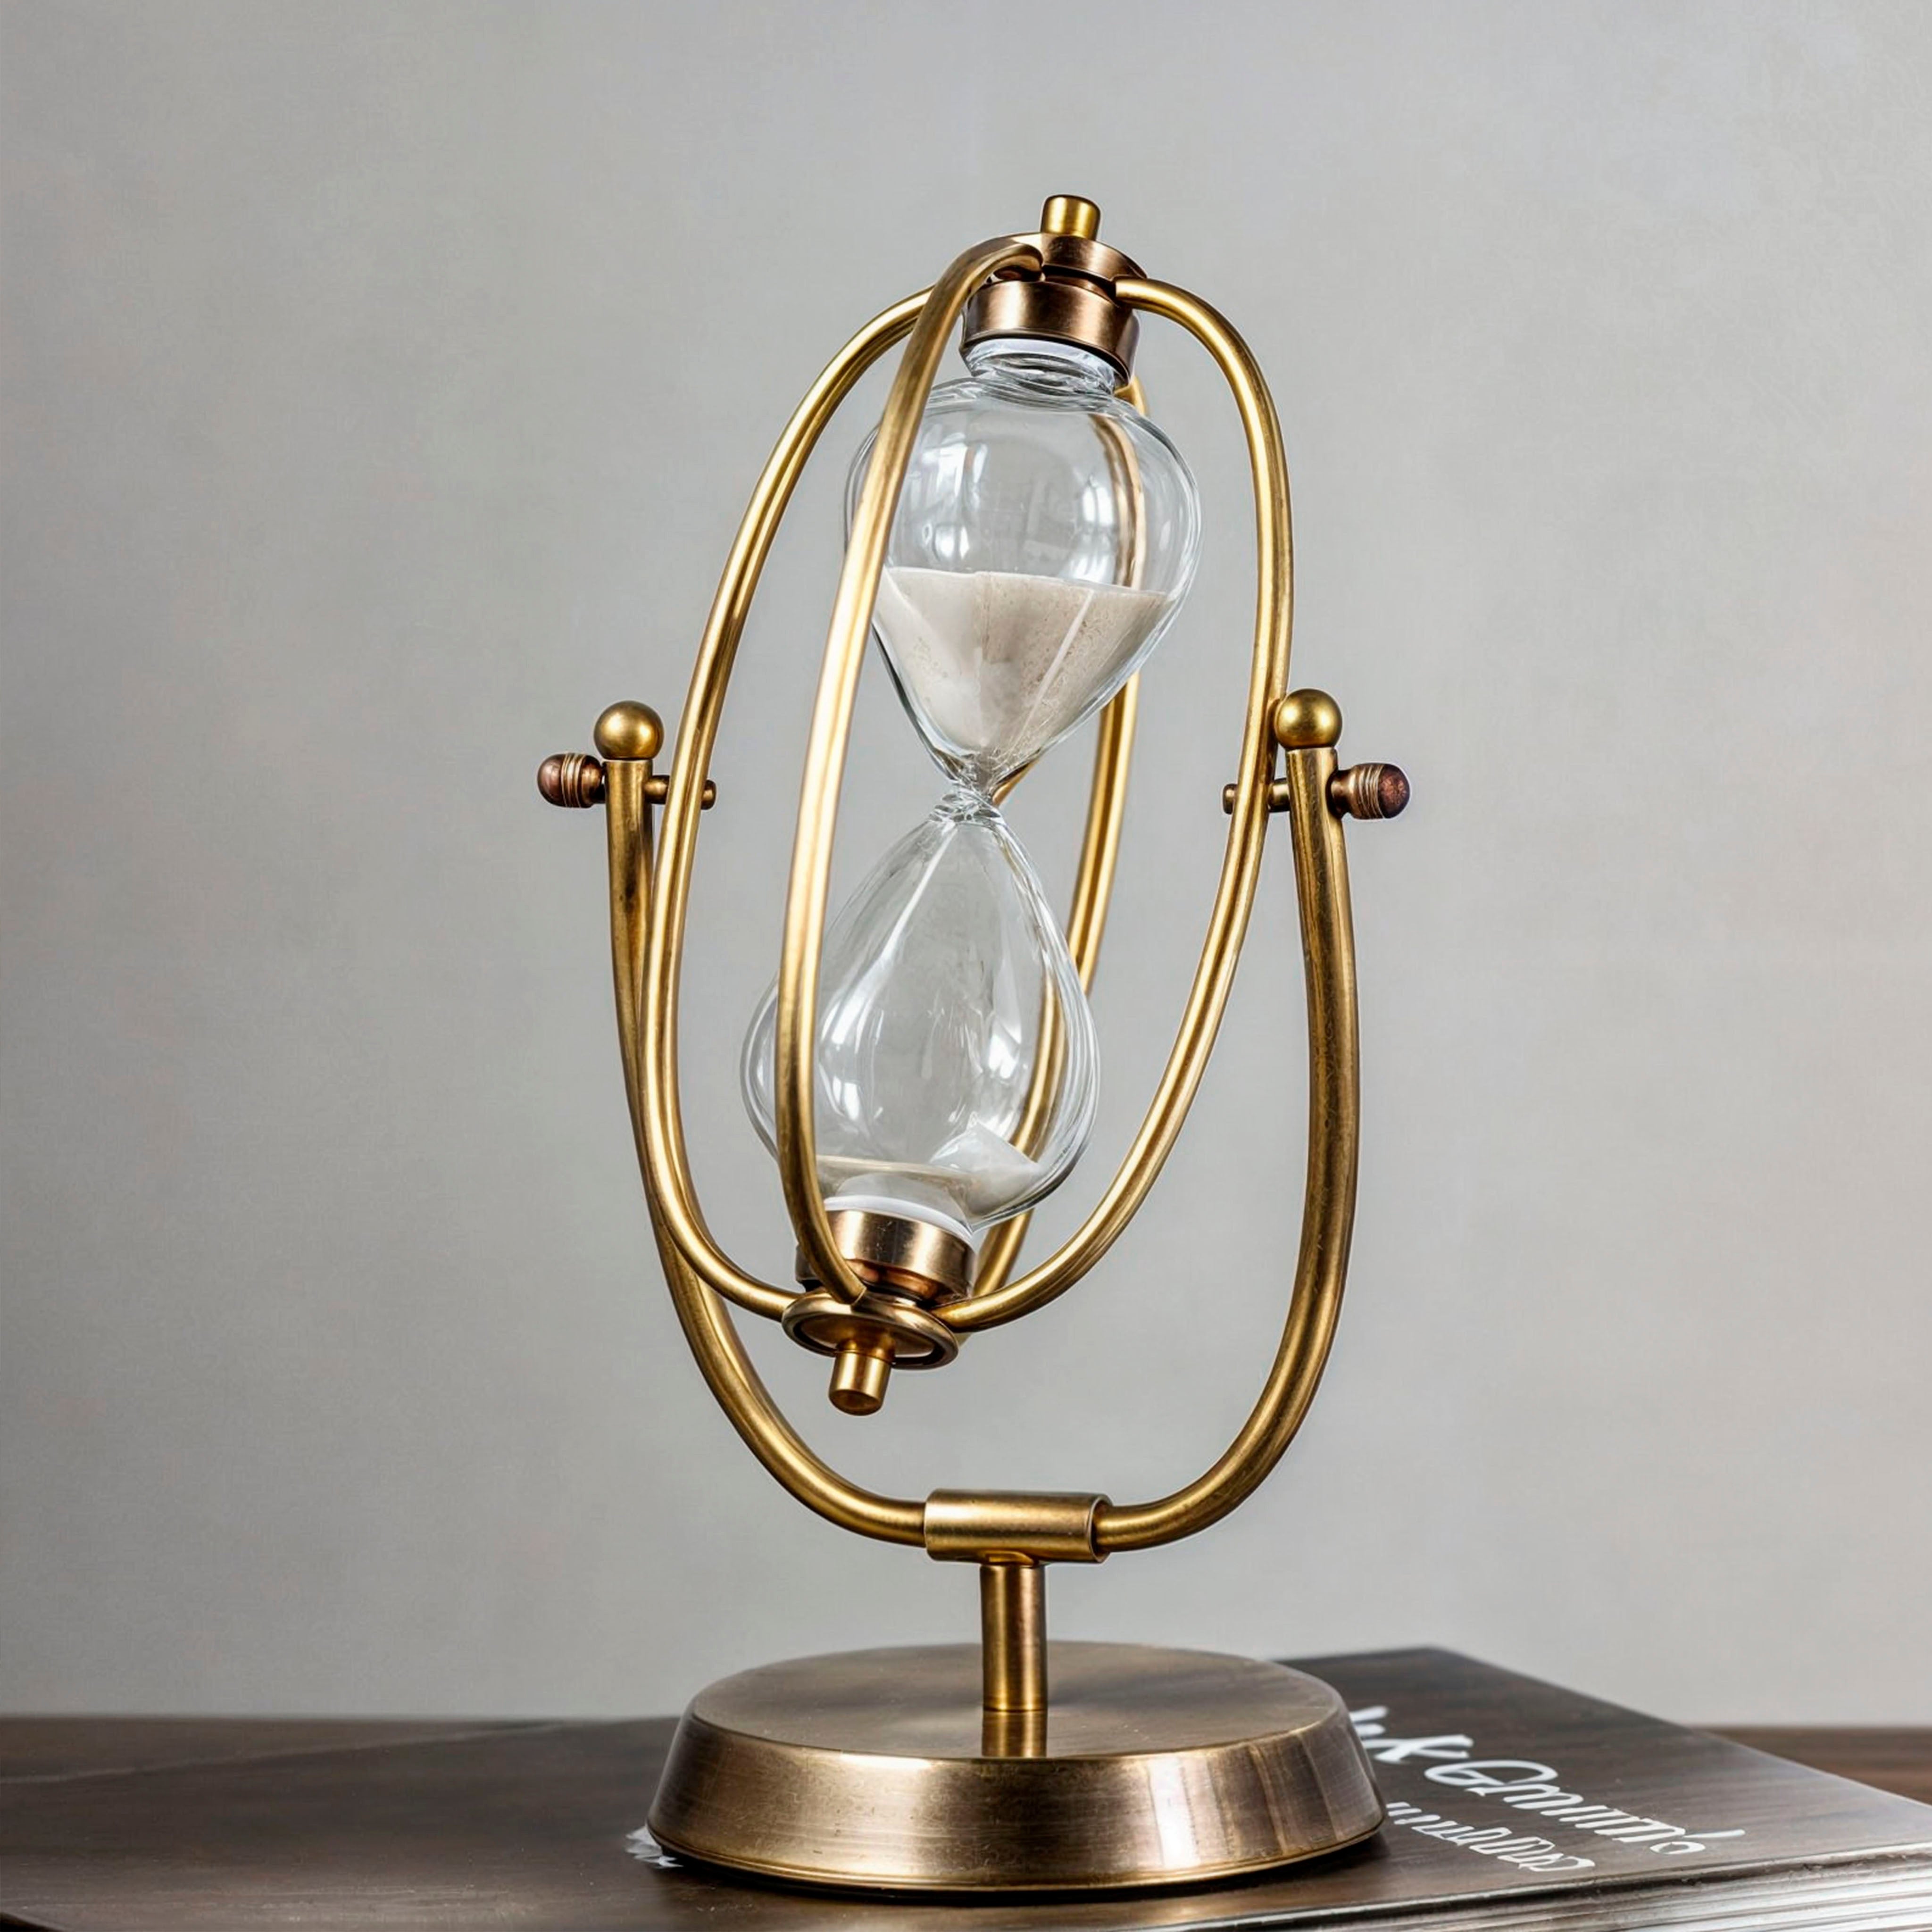 The Hourglass Sculpture